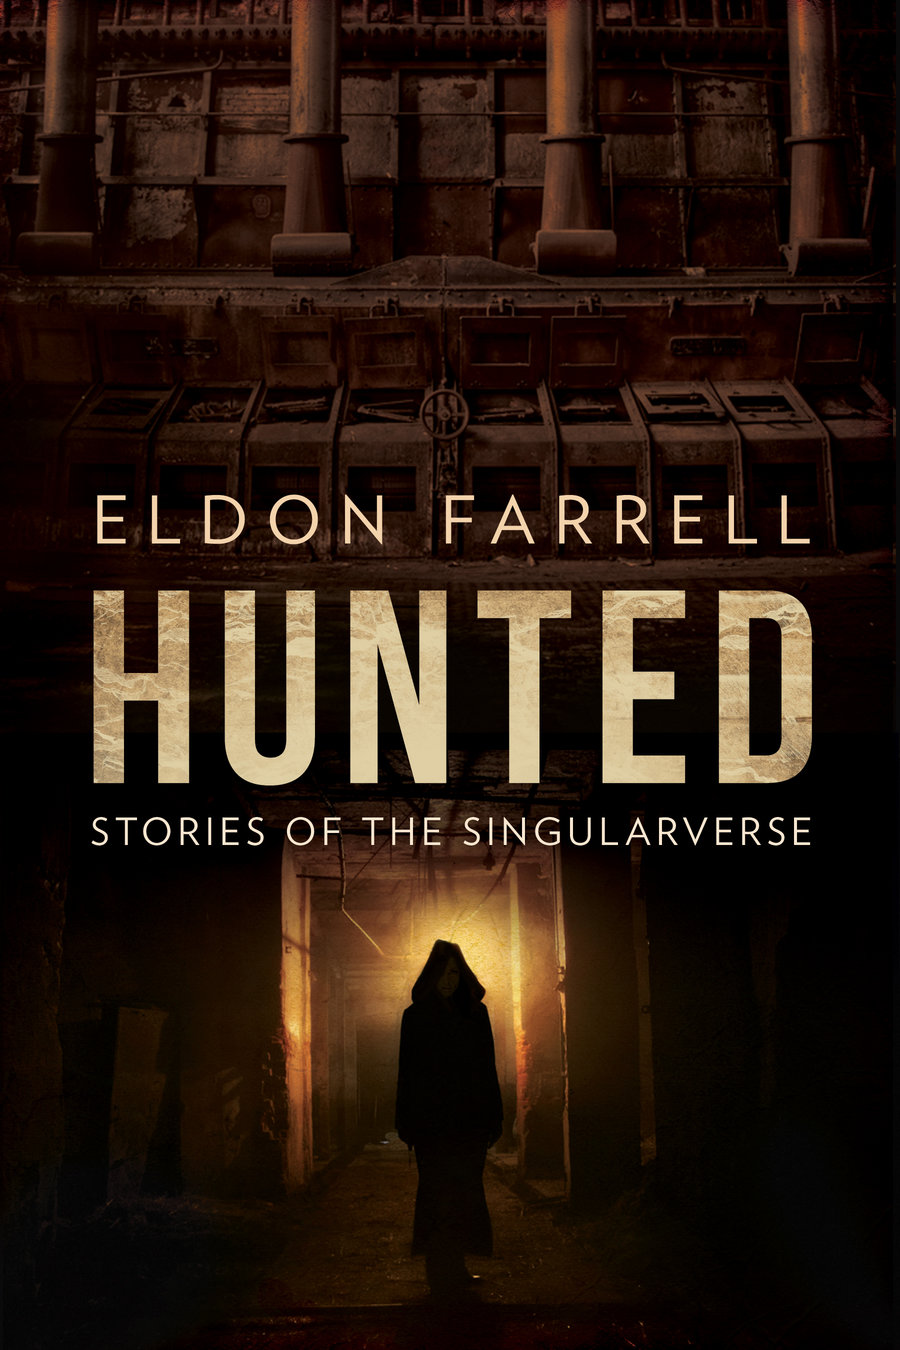 Hunted: Stories of the Singularverse